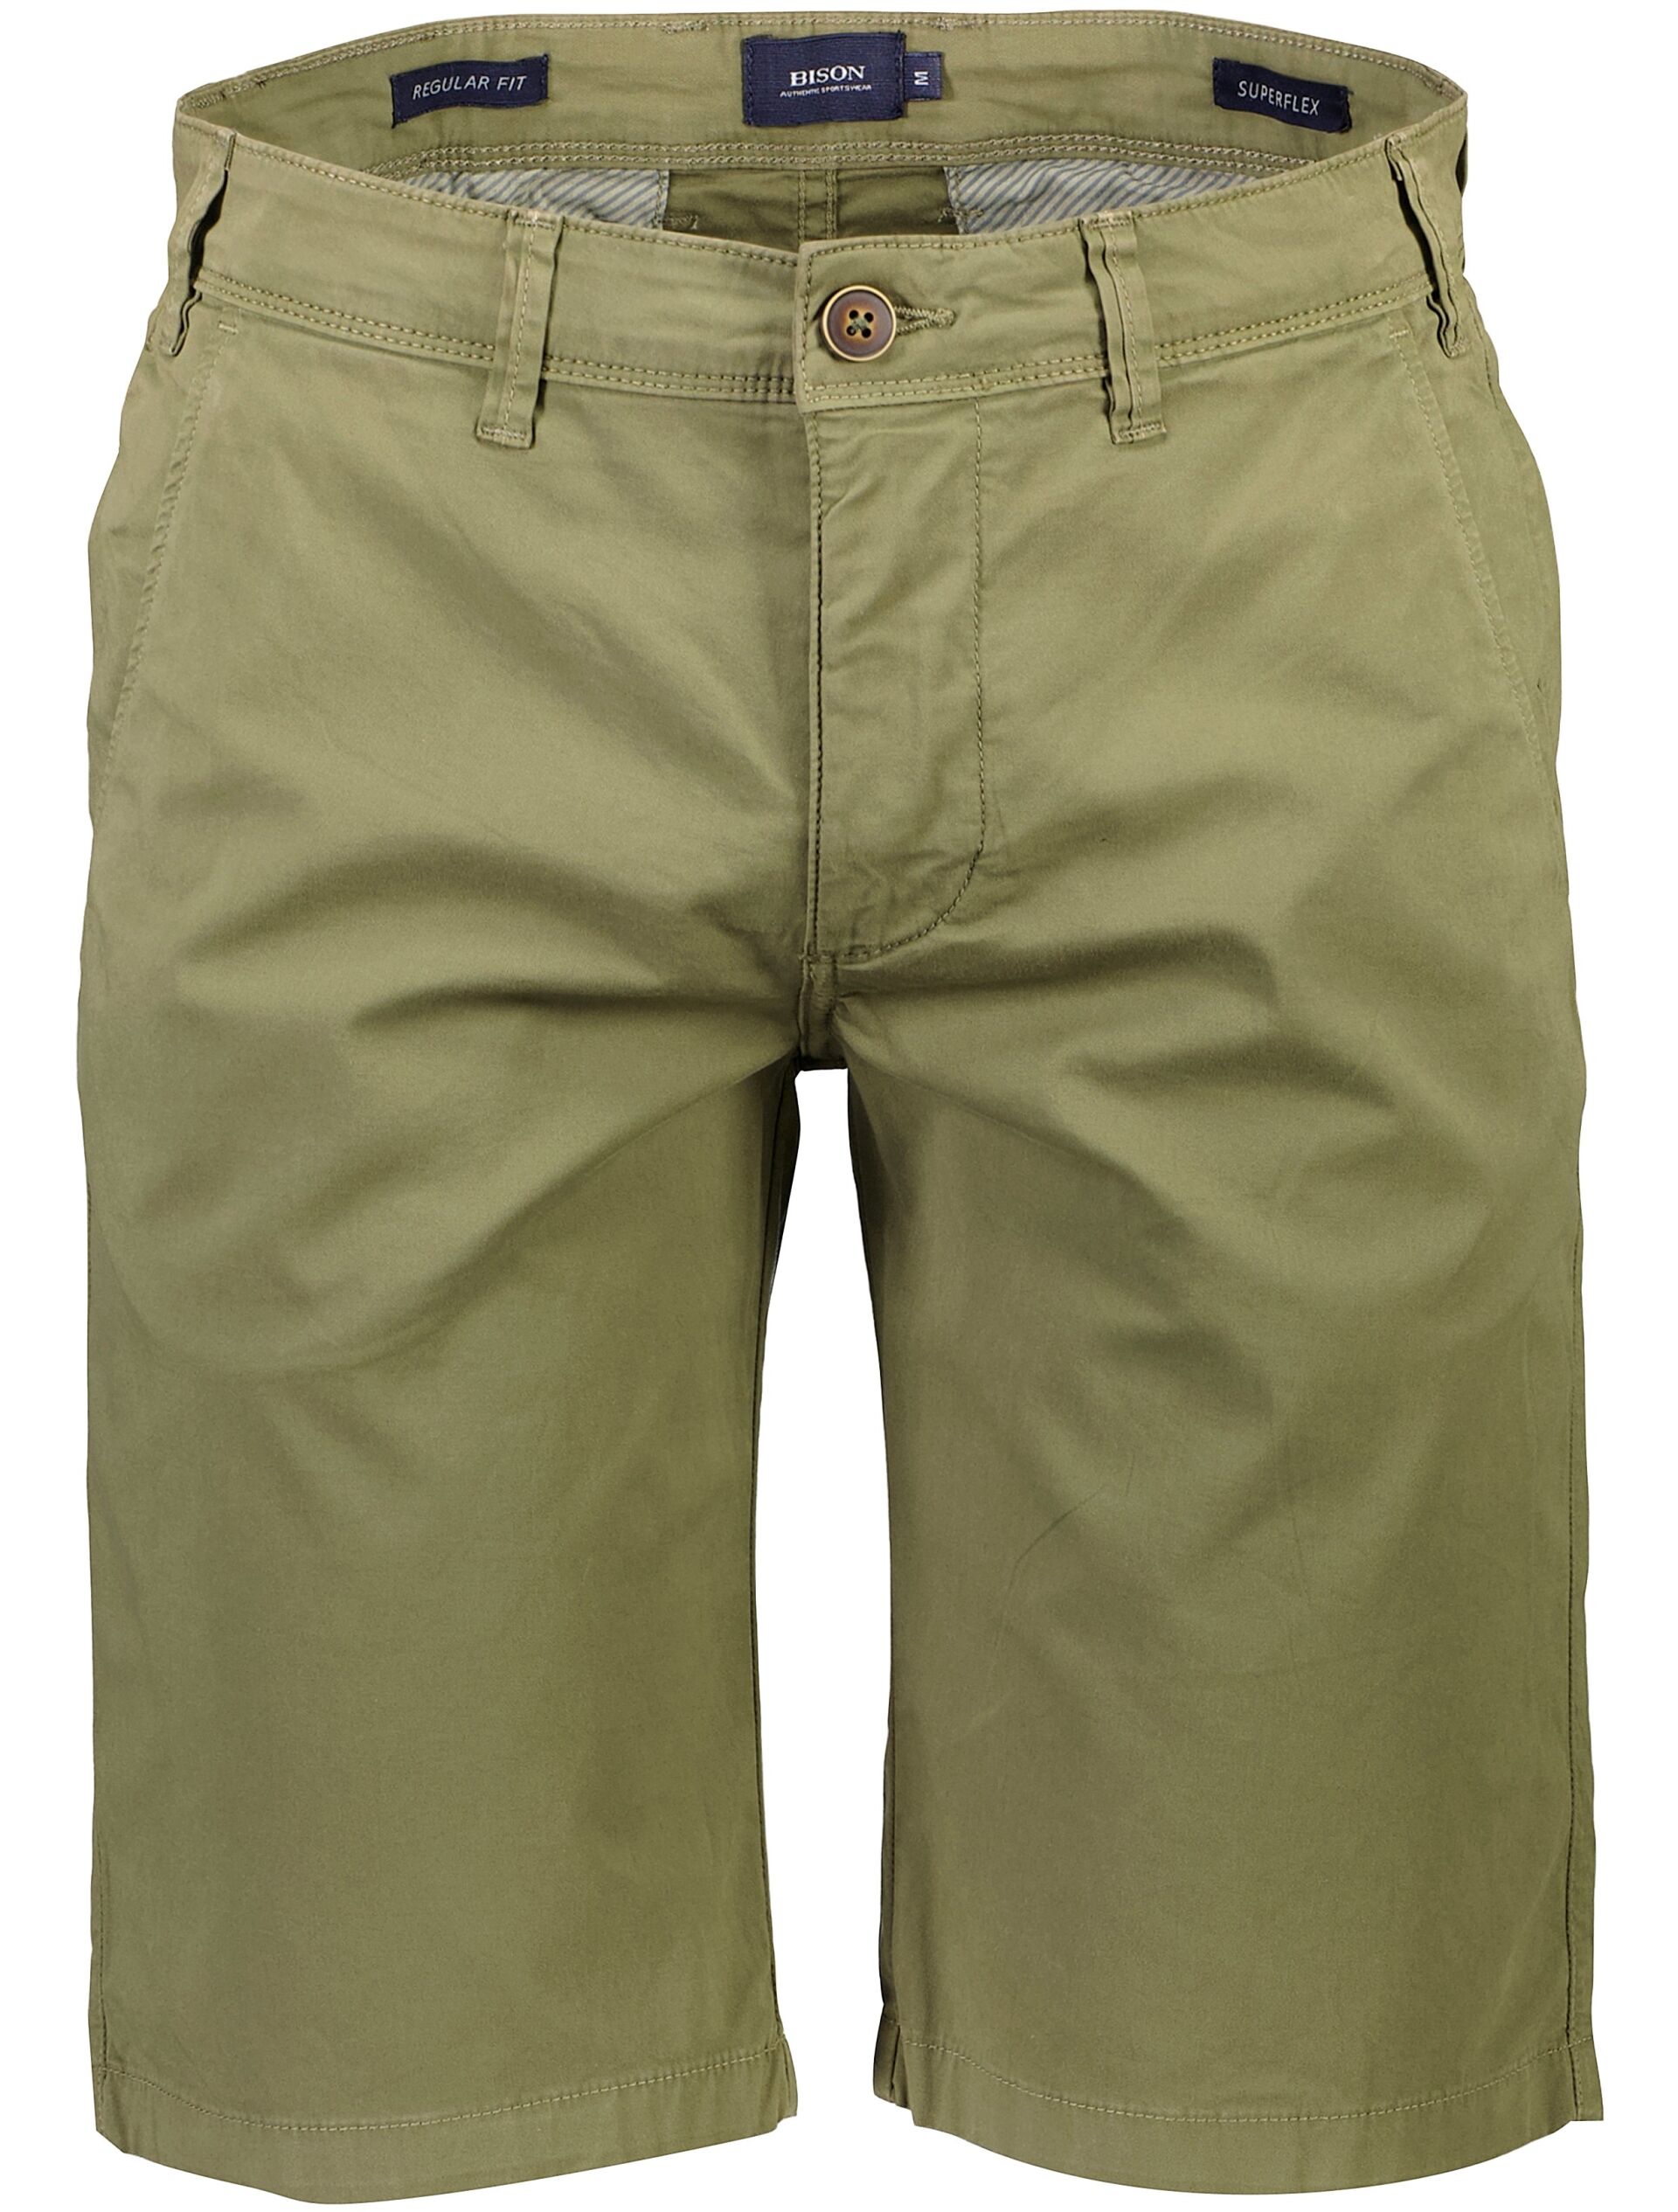 Bison  Chino shorts Grøn 80-512013